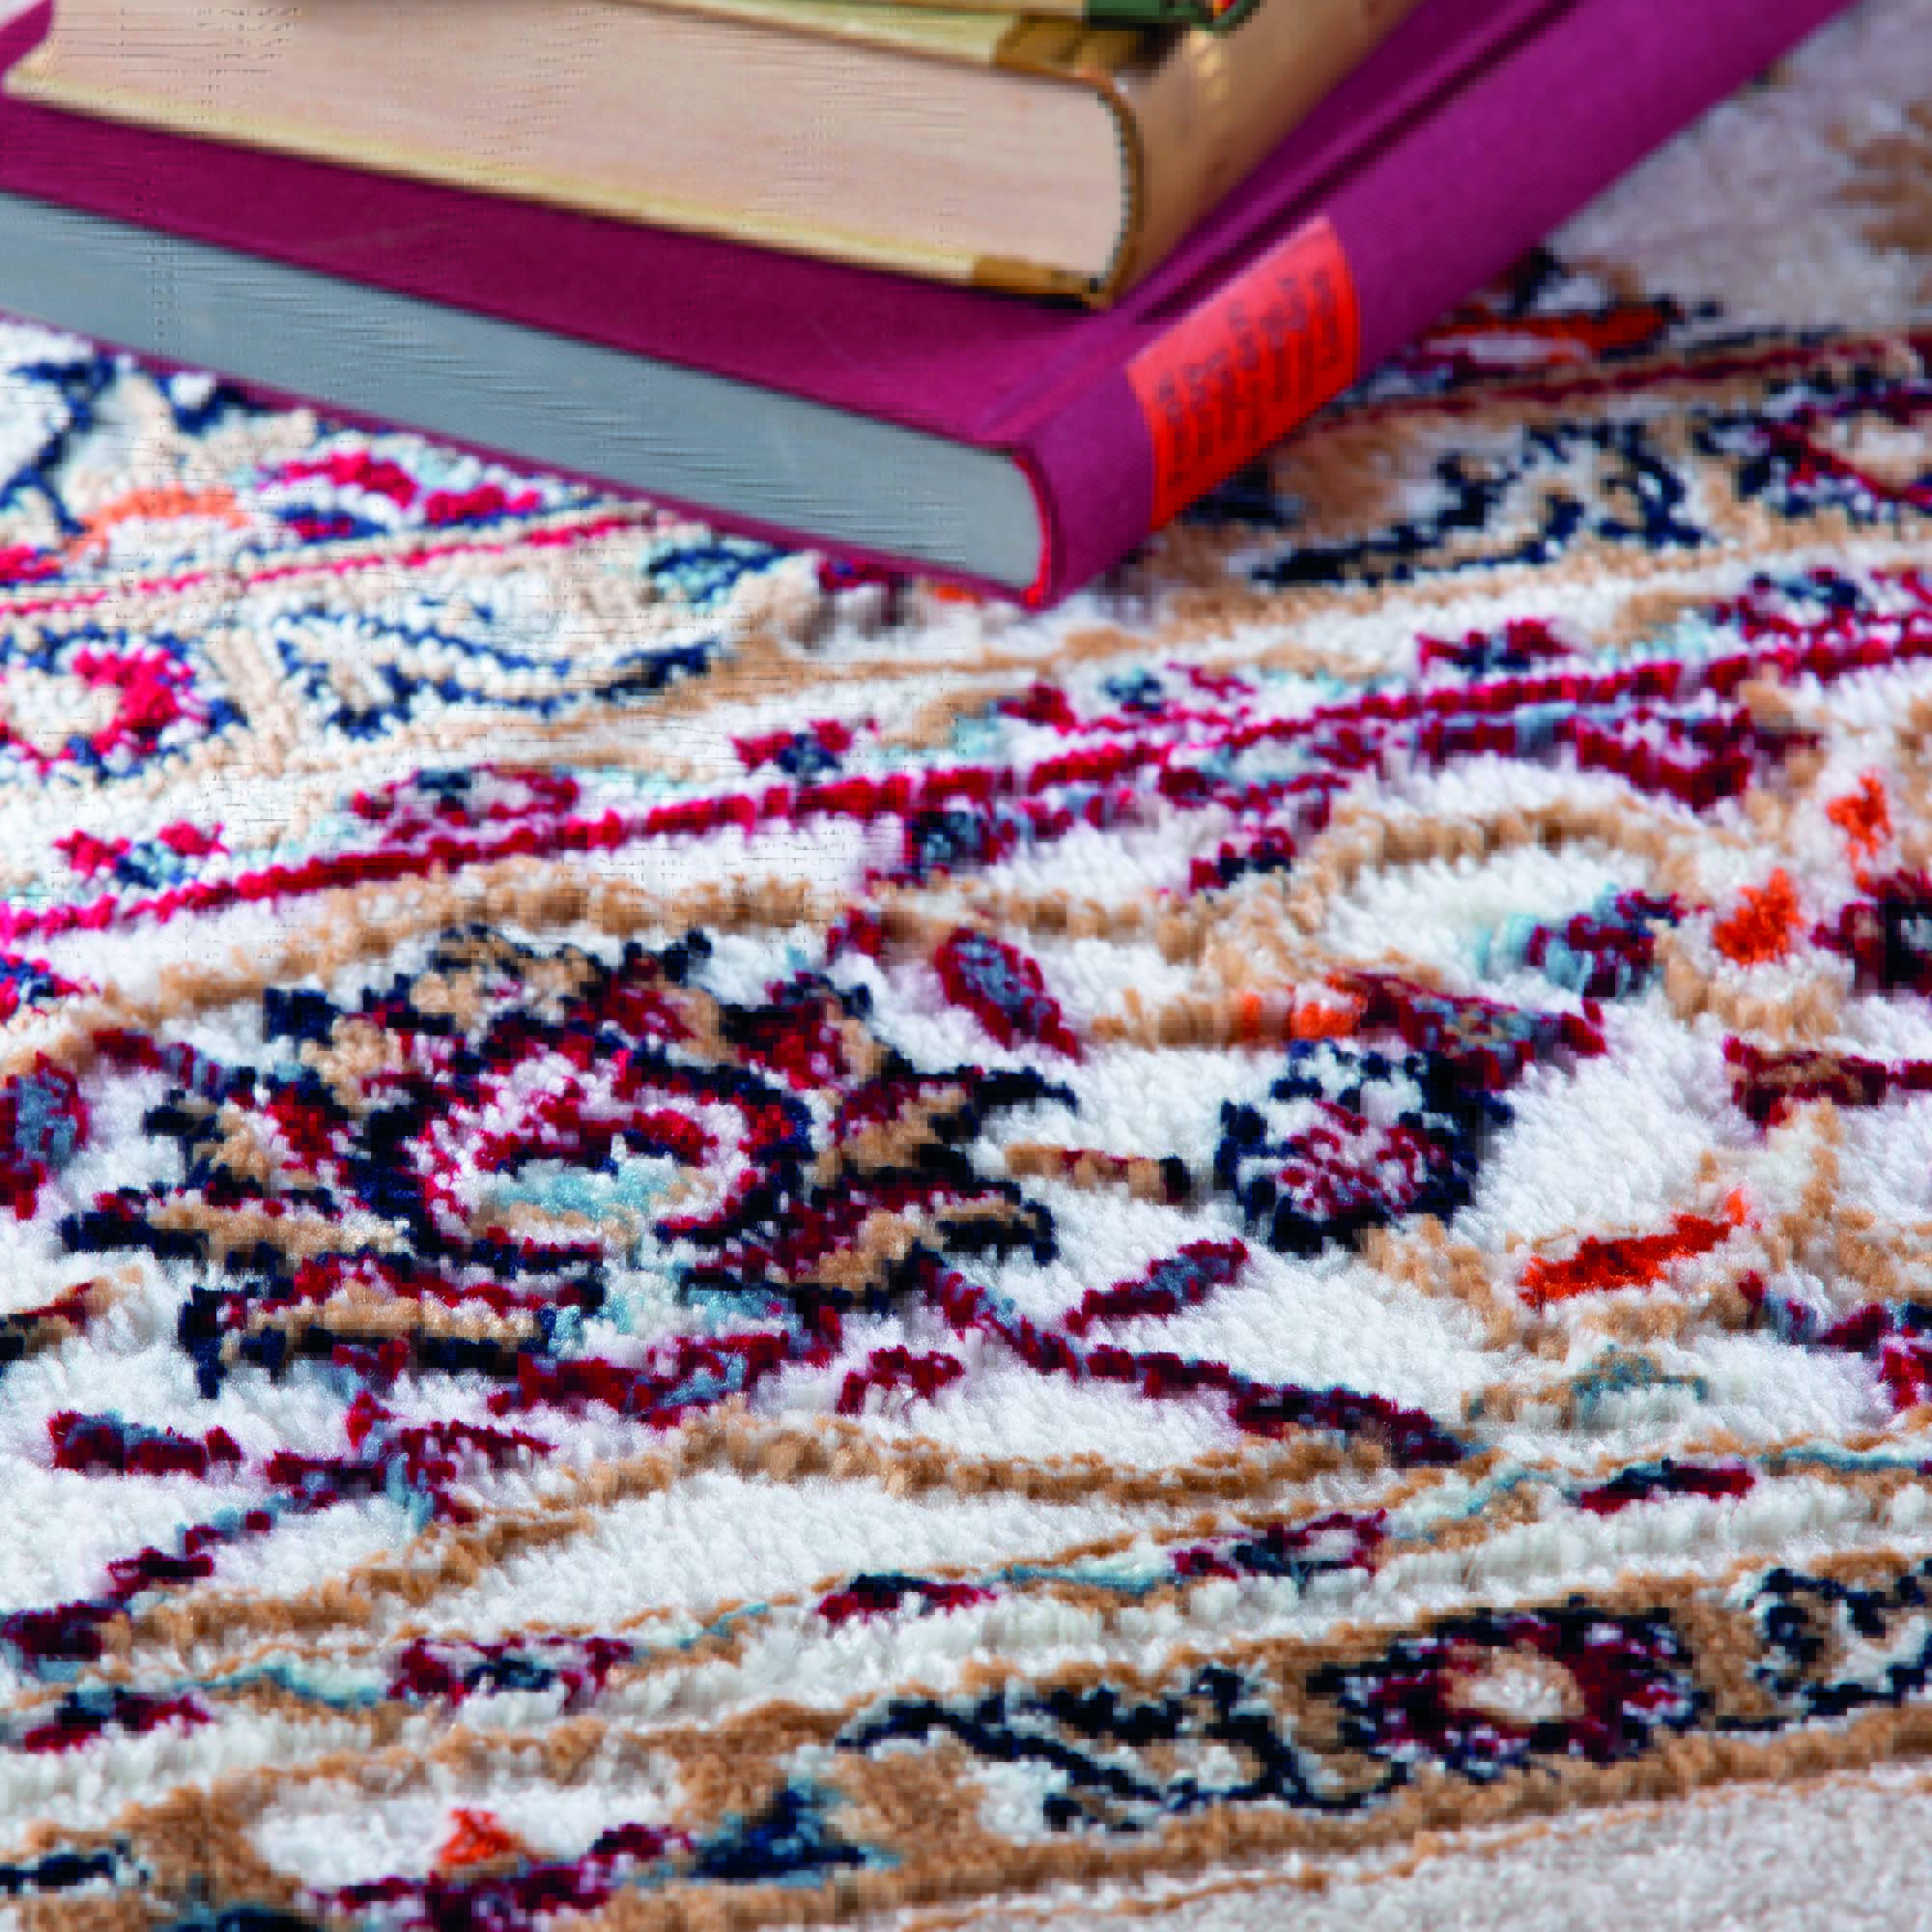 Carpet Furnishings My Isfahan beige Obsession